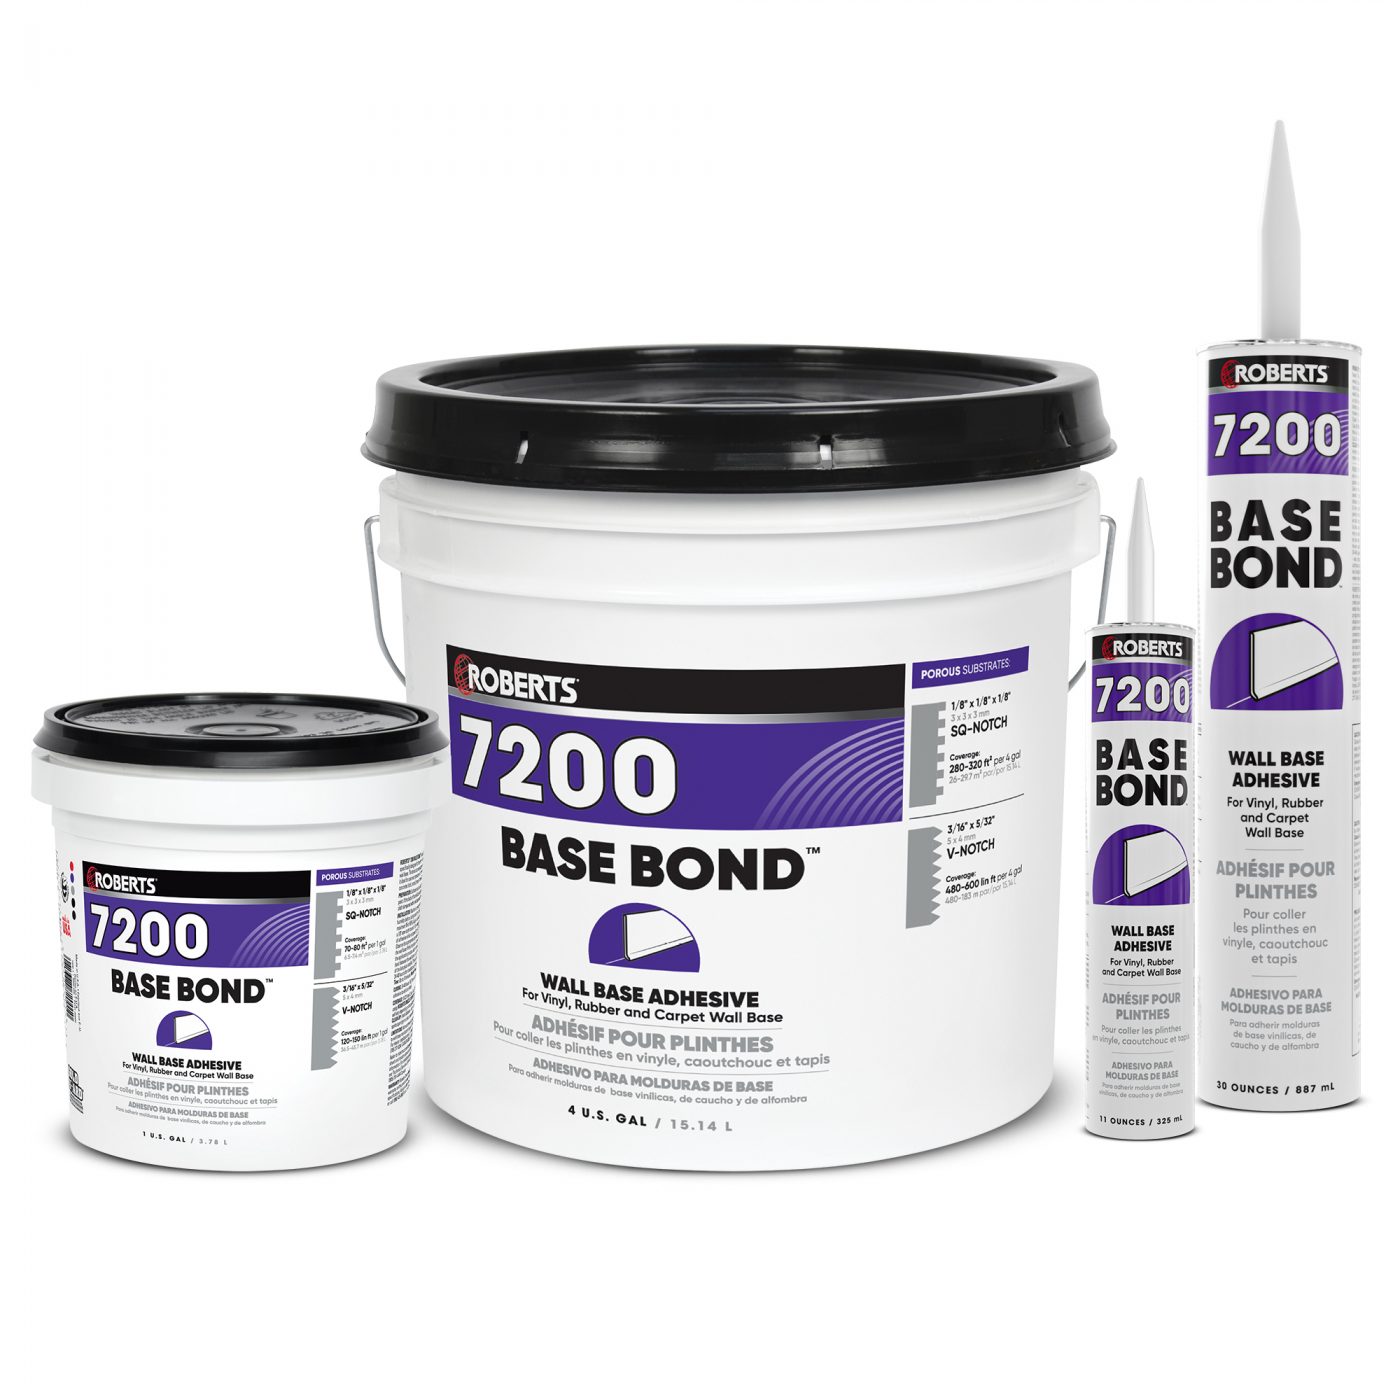 7200 BASE BOND® - Roberts Consolidated